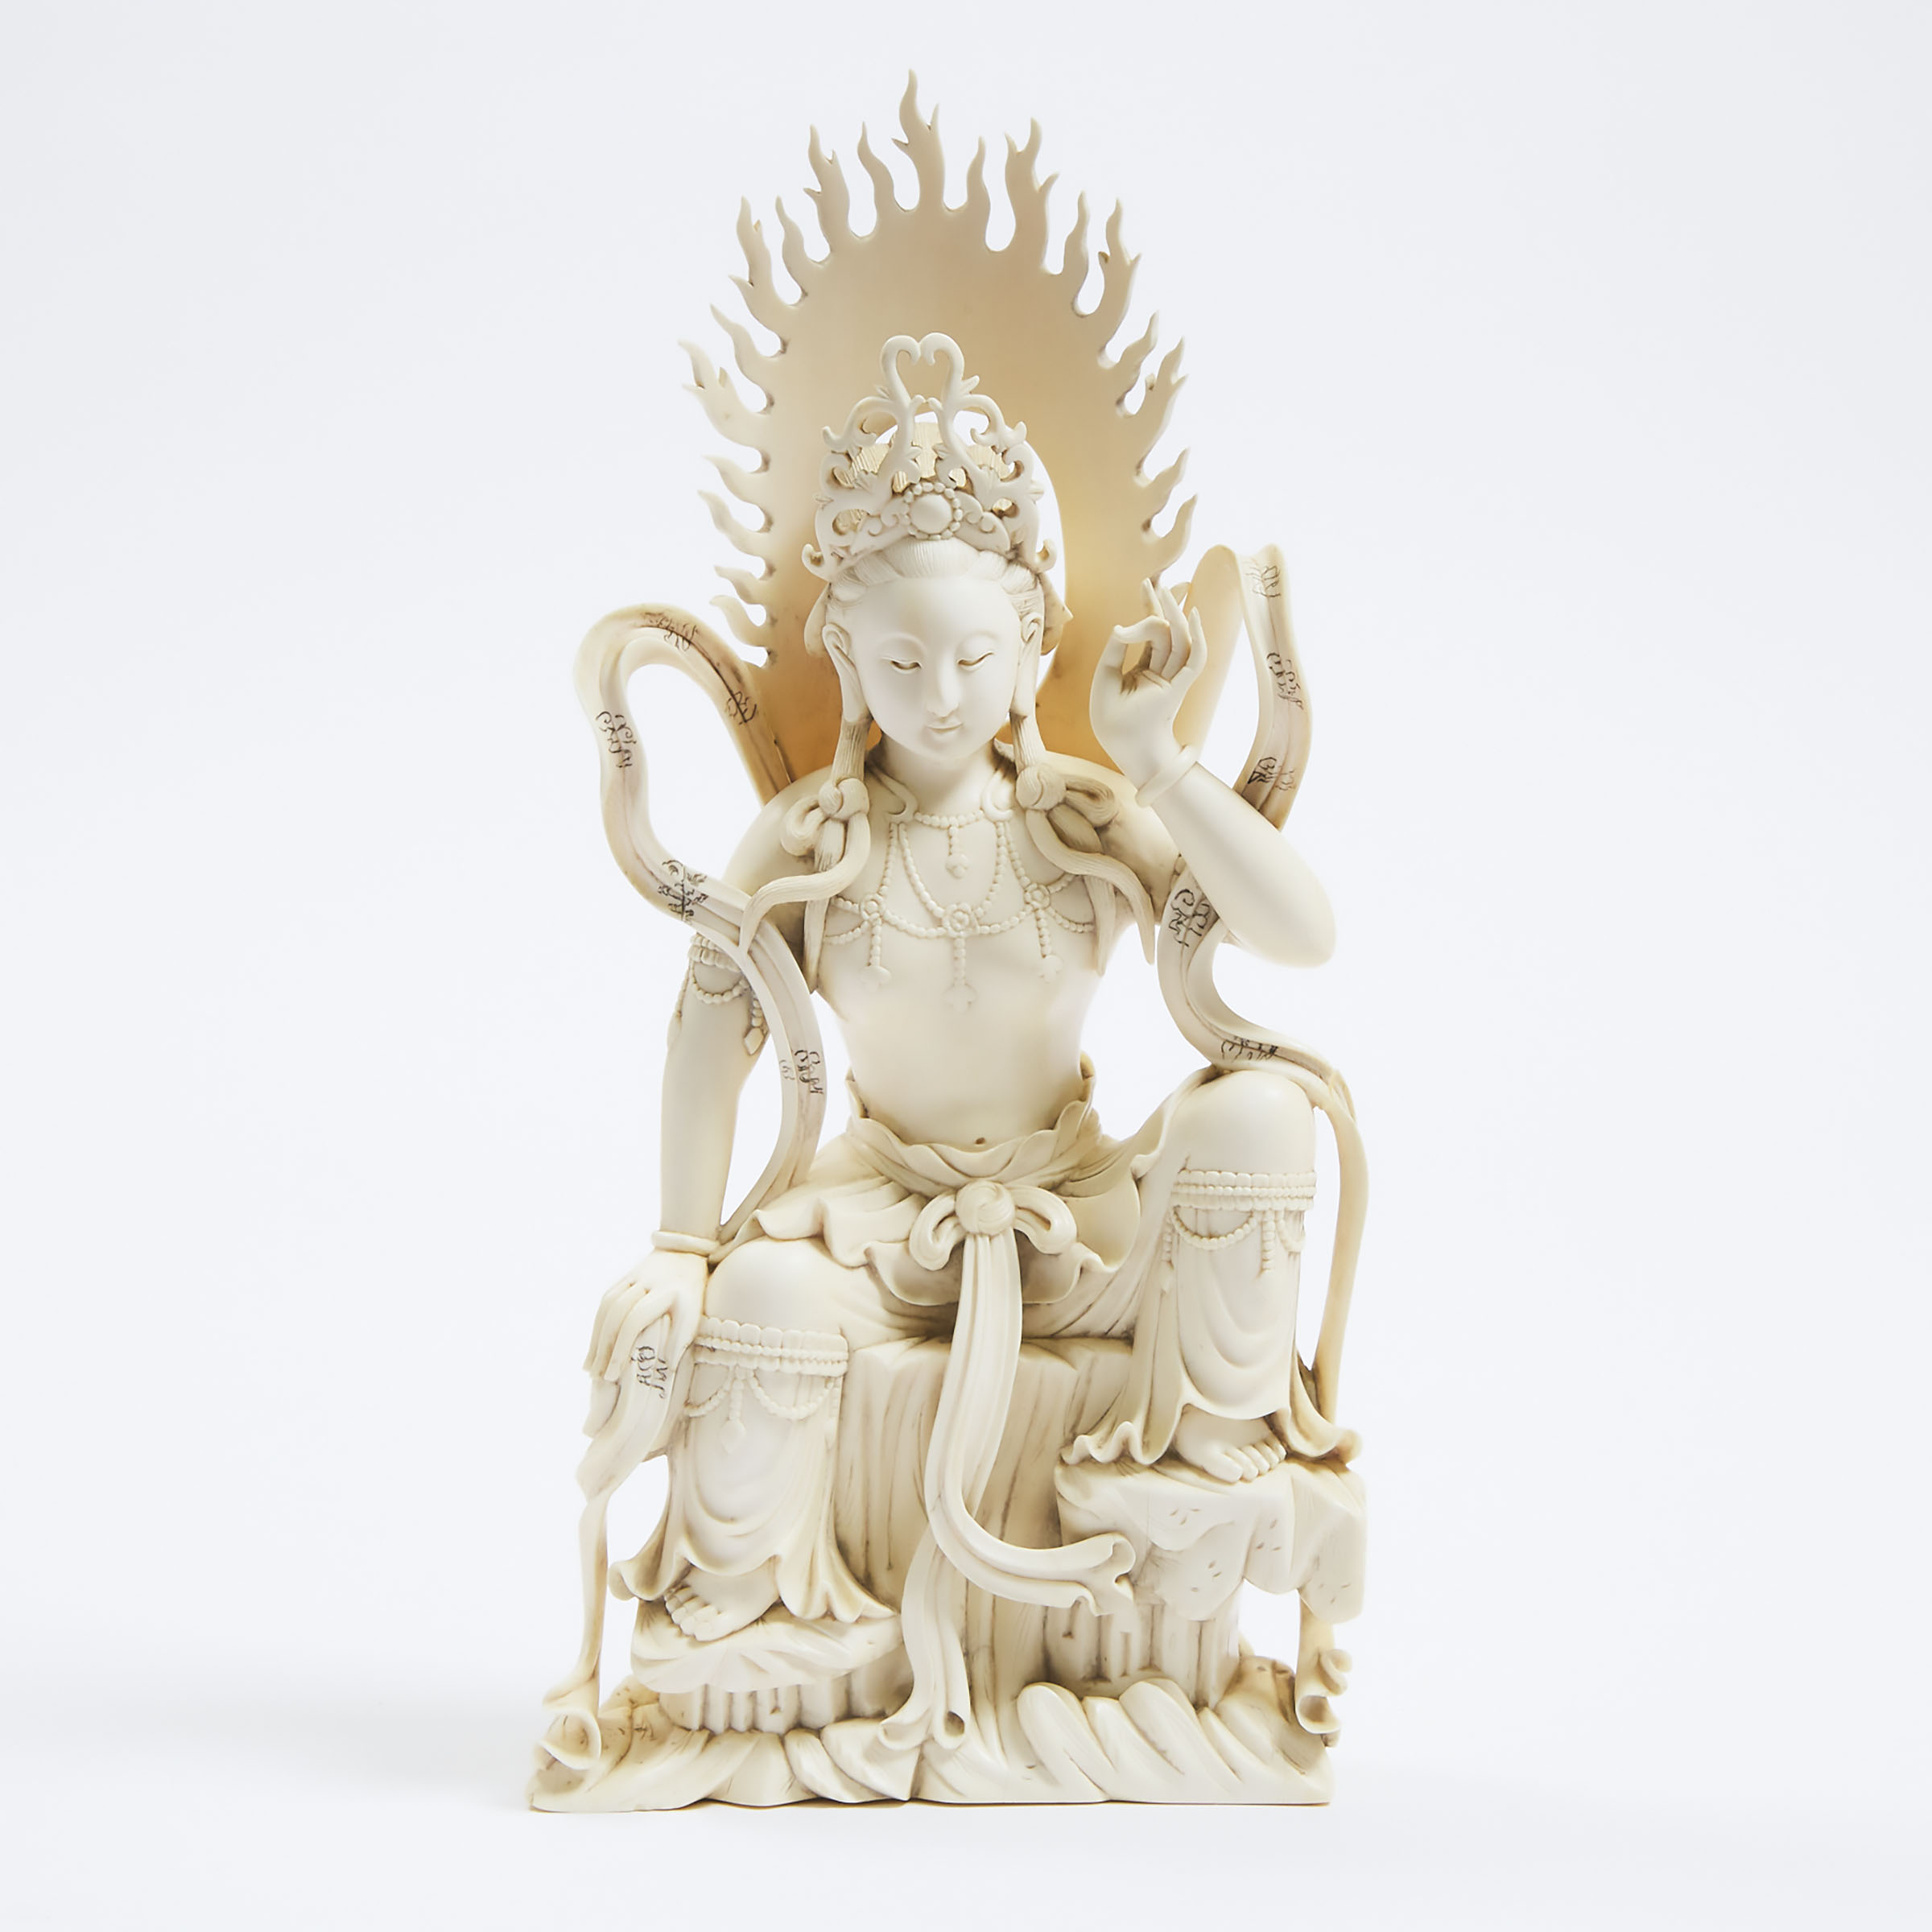 An Ivory Figure of Guanyin (Avalokiteshvara), Early 20th Century